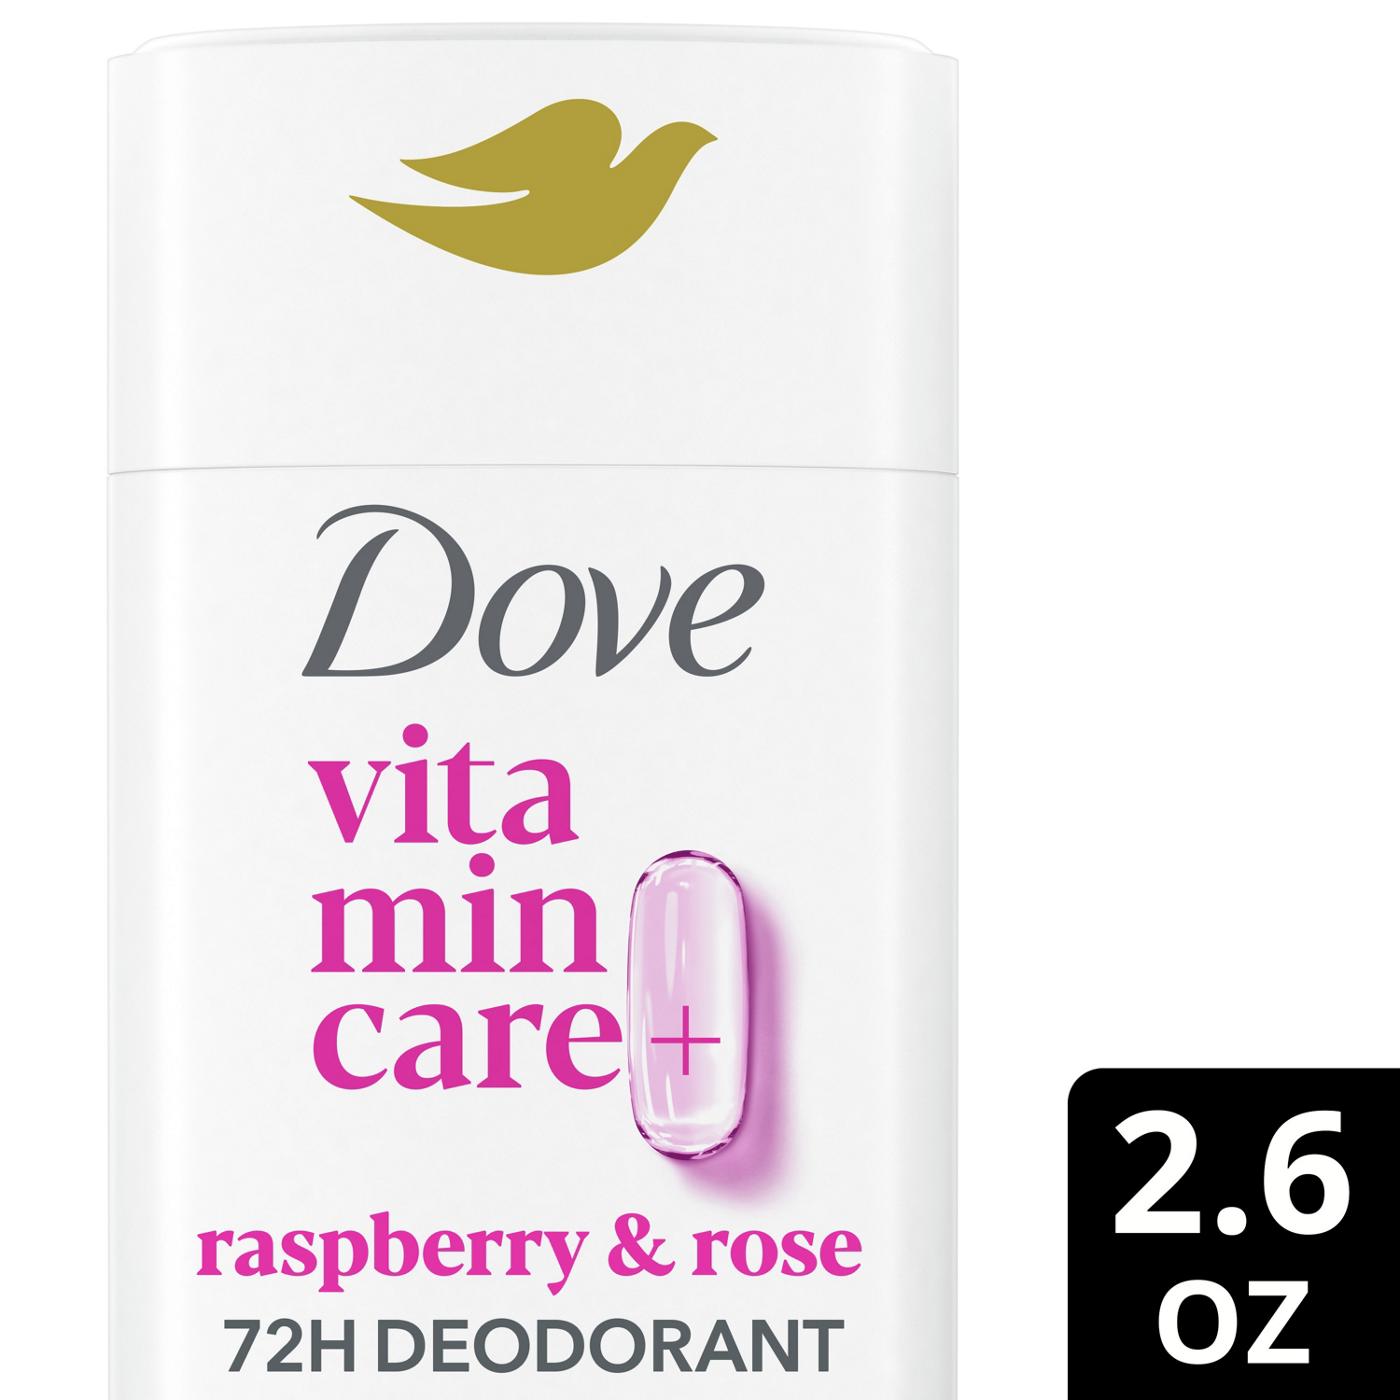 Dove Vitamin Care+ Deodorant - Raspberry & Rose; image 2 of 2